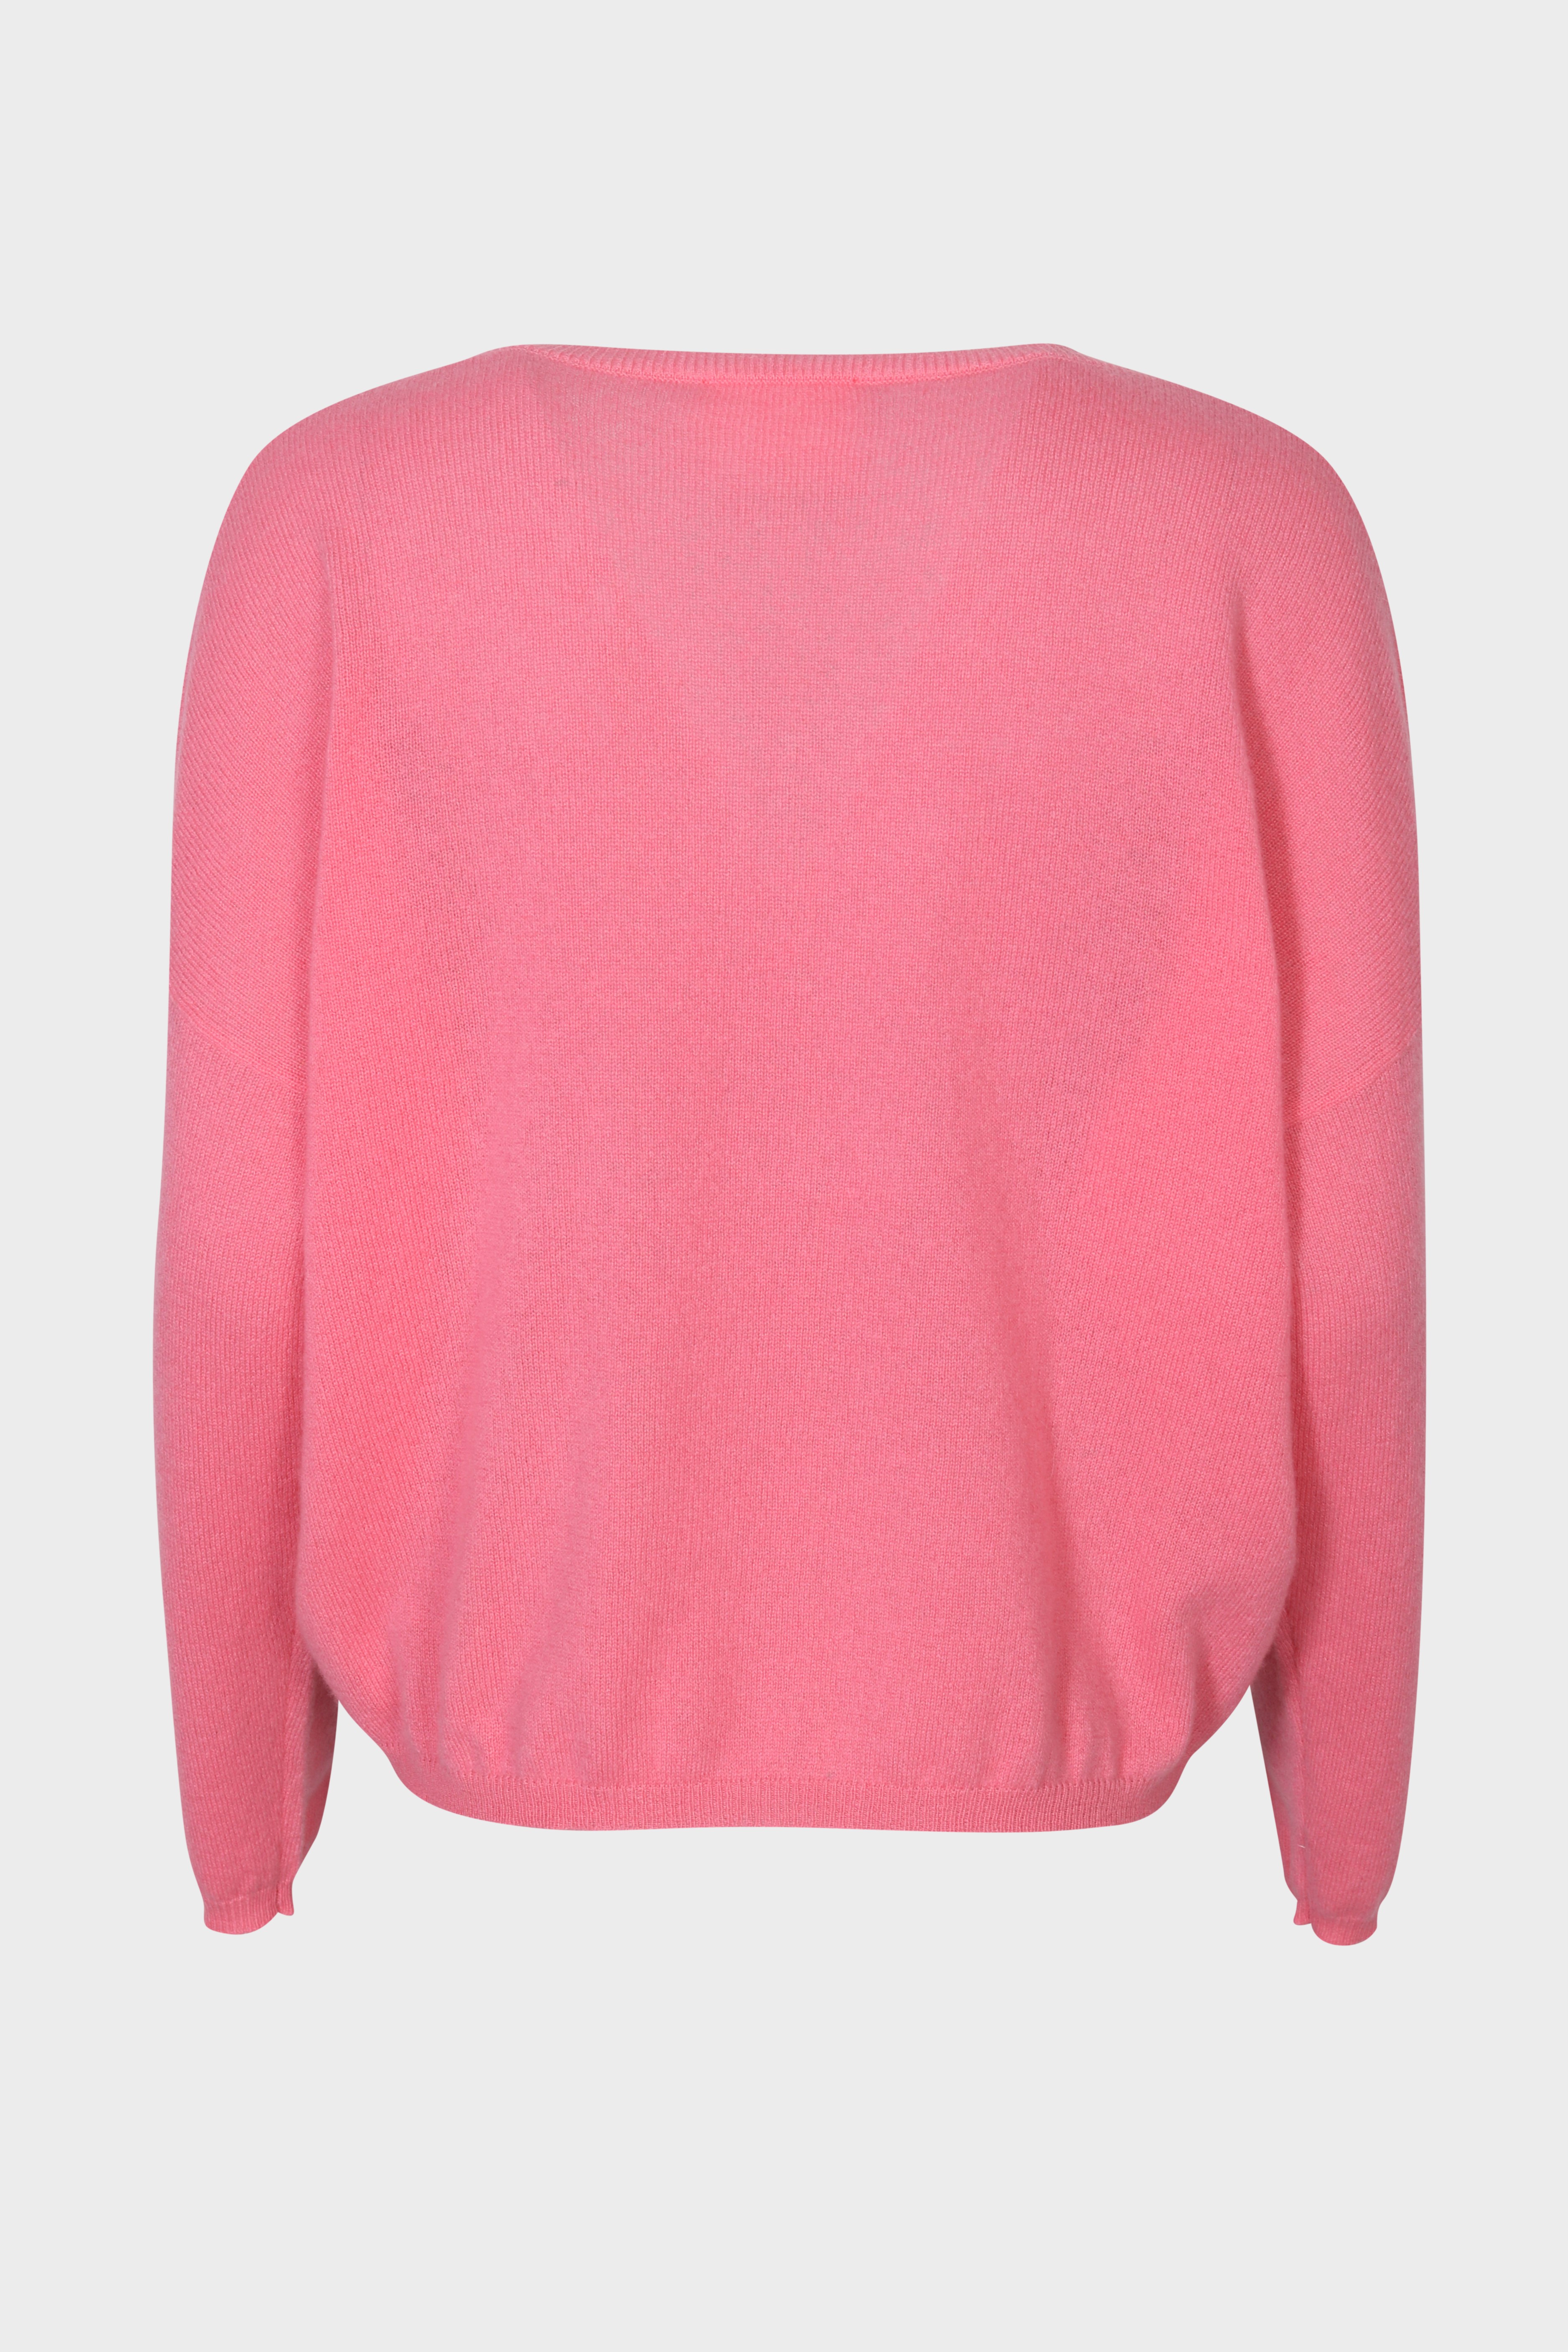 ABSOLUT CASHMERE V-Neck Sweater Alicia Flamingo L